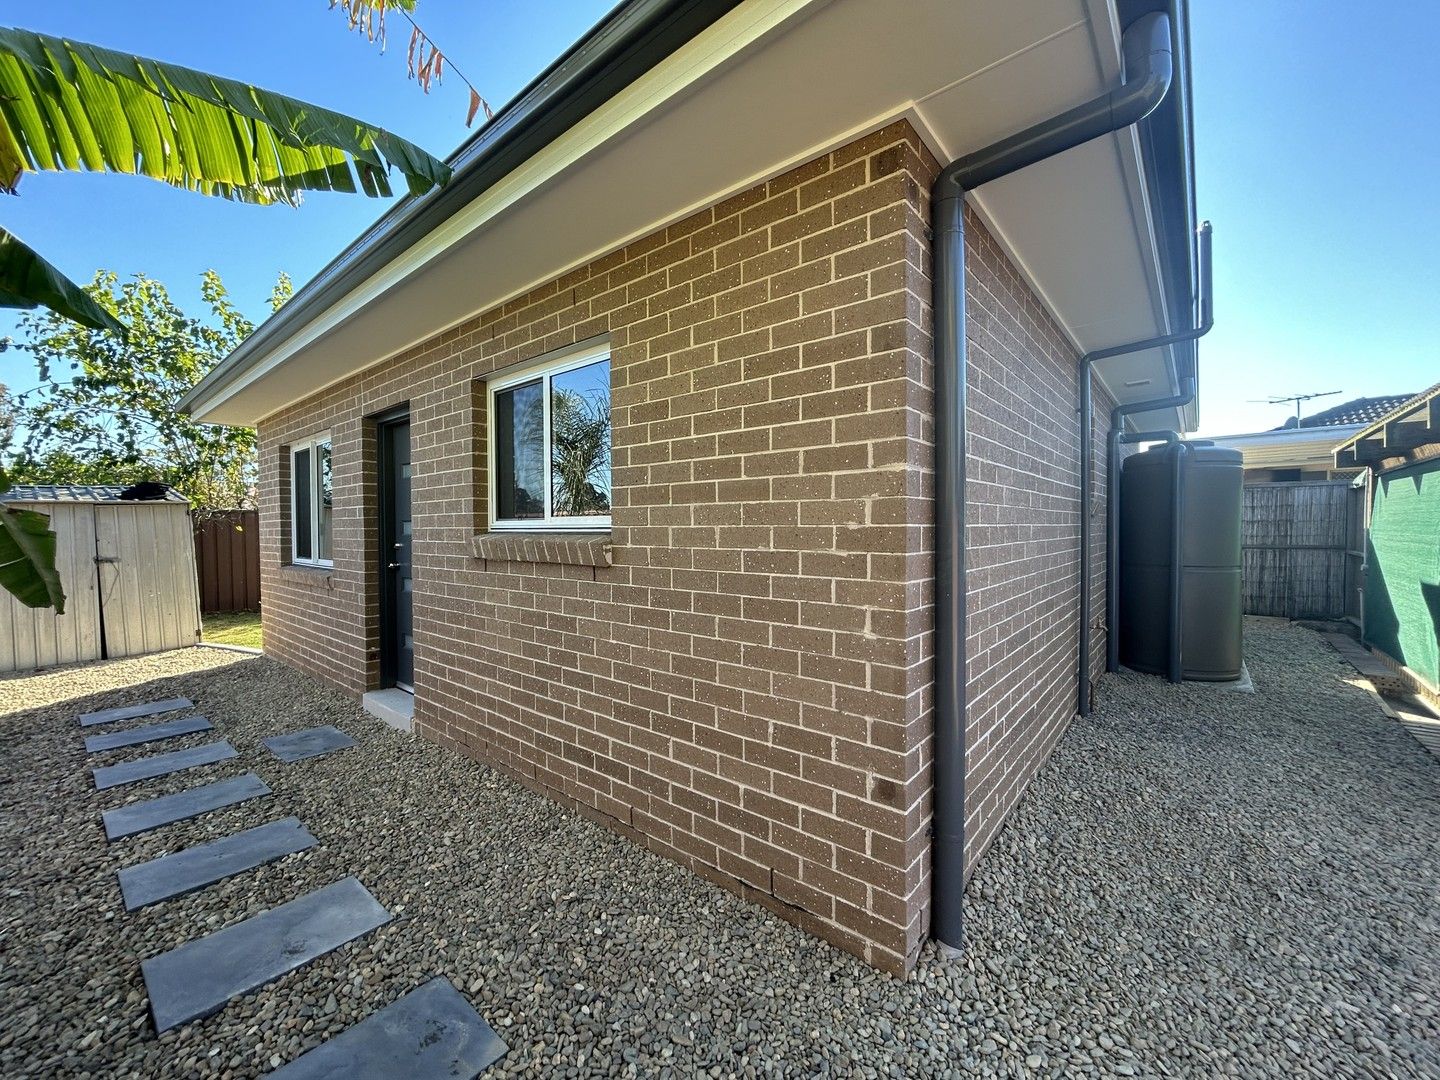 2 bedrooms House in 14A Alden Grove OAKHURST NSW, 2761